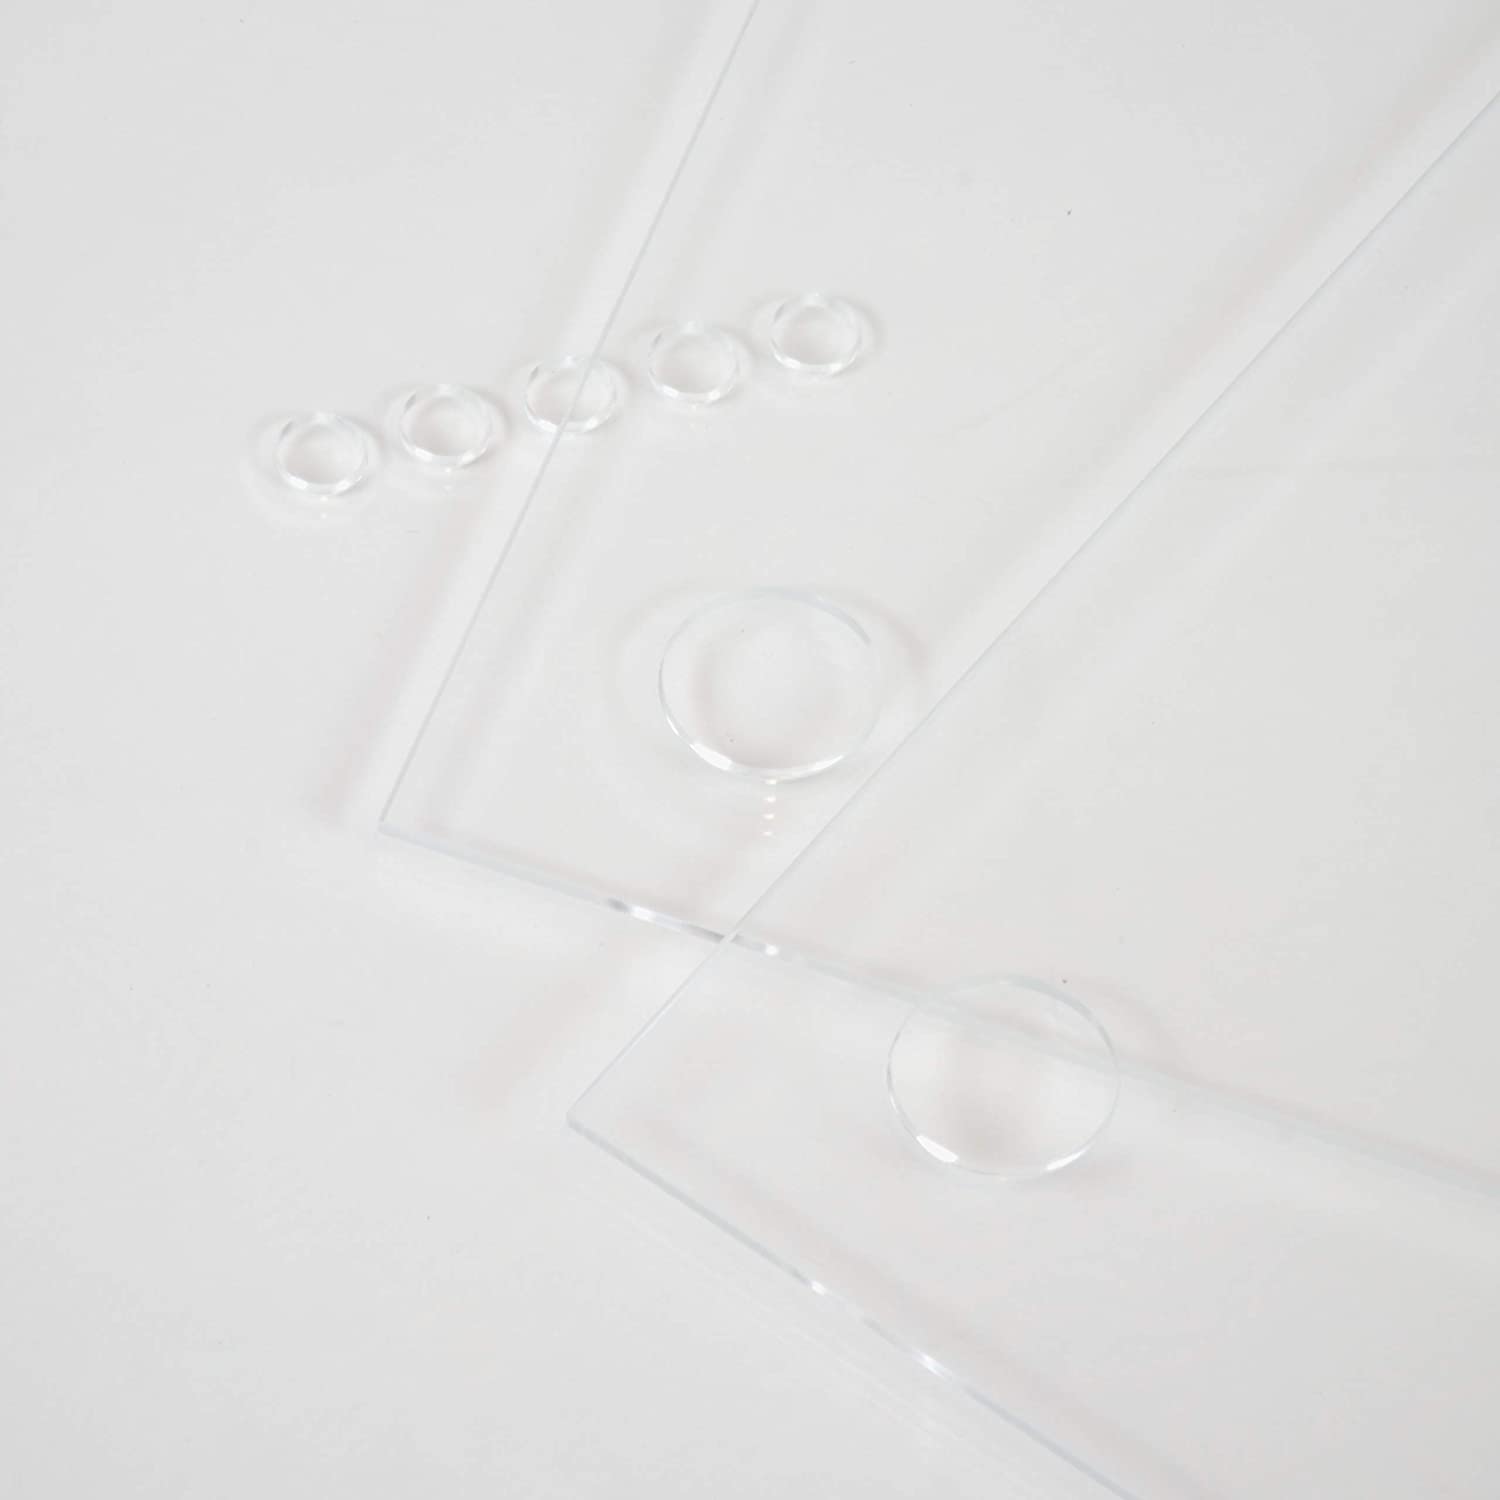 IKEA Lack V2 Plexiglass 5 Pack (3mm) + 10 Magnets (20mm x 6mm x 2mm) for 3D Printer Enclosure